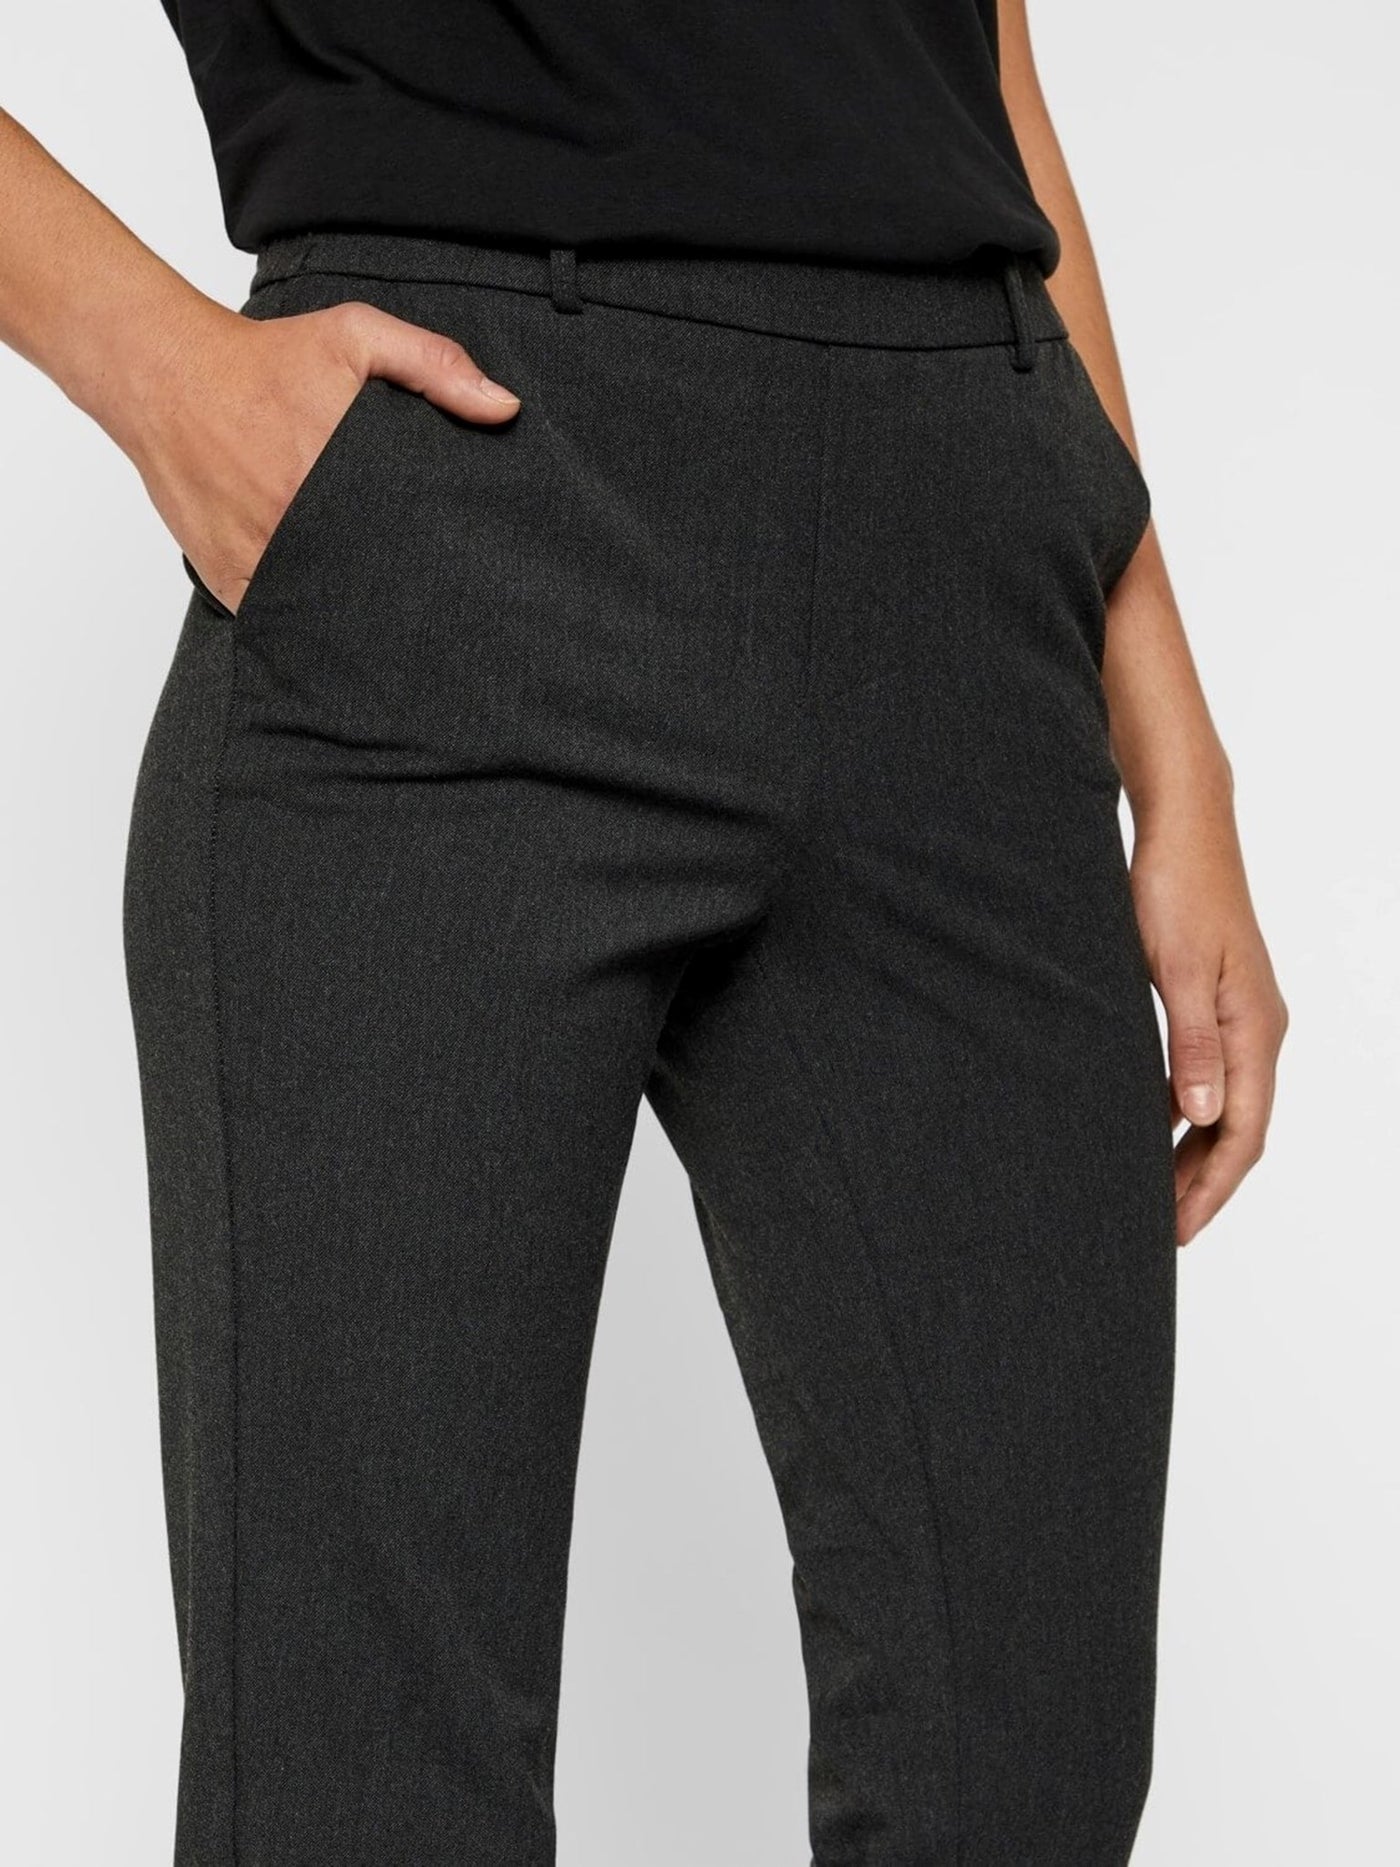 Maya Trousers (wide model) - Dark Grey - Vero Moda - Grey 7